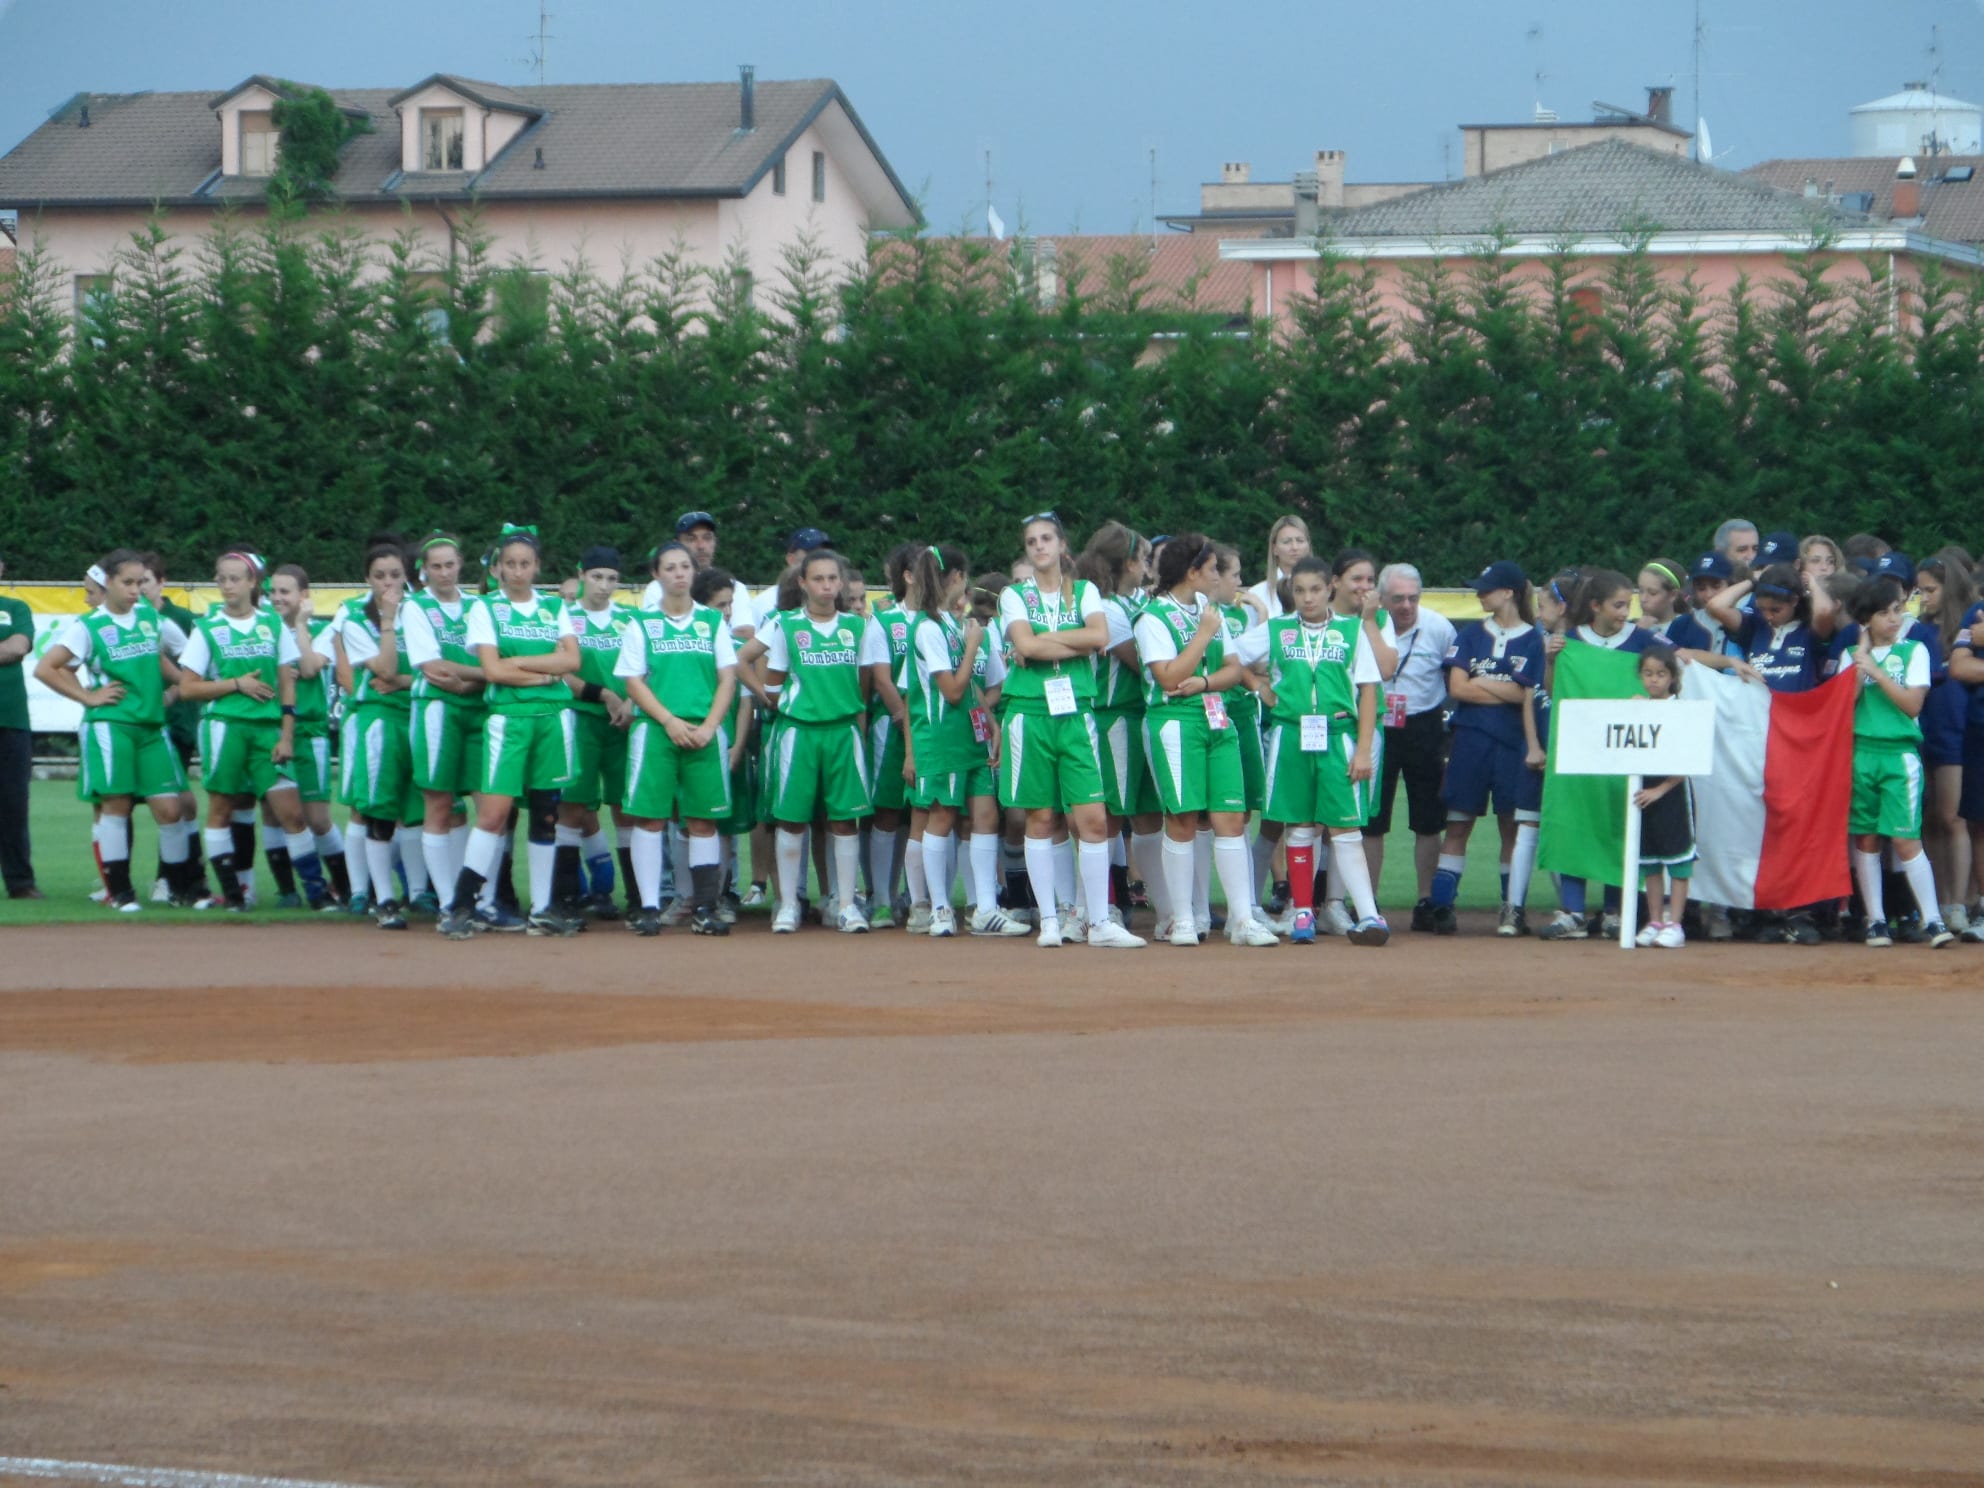 Softball: la Lombardia “caronnese” vince la Junior league e vola negli Usa